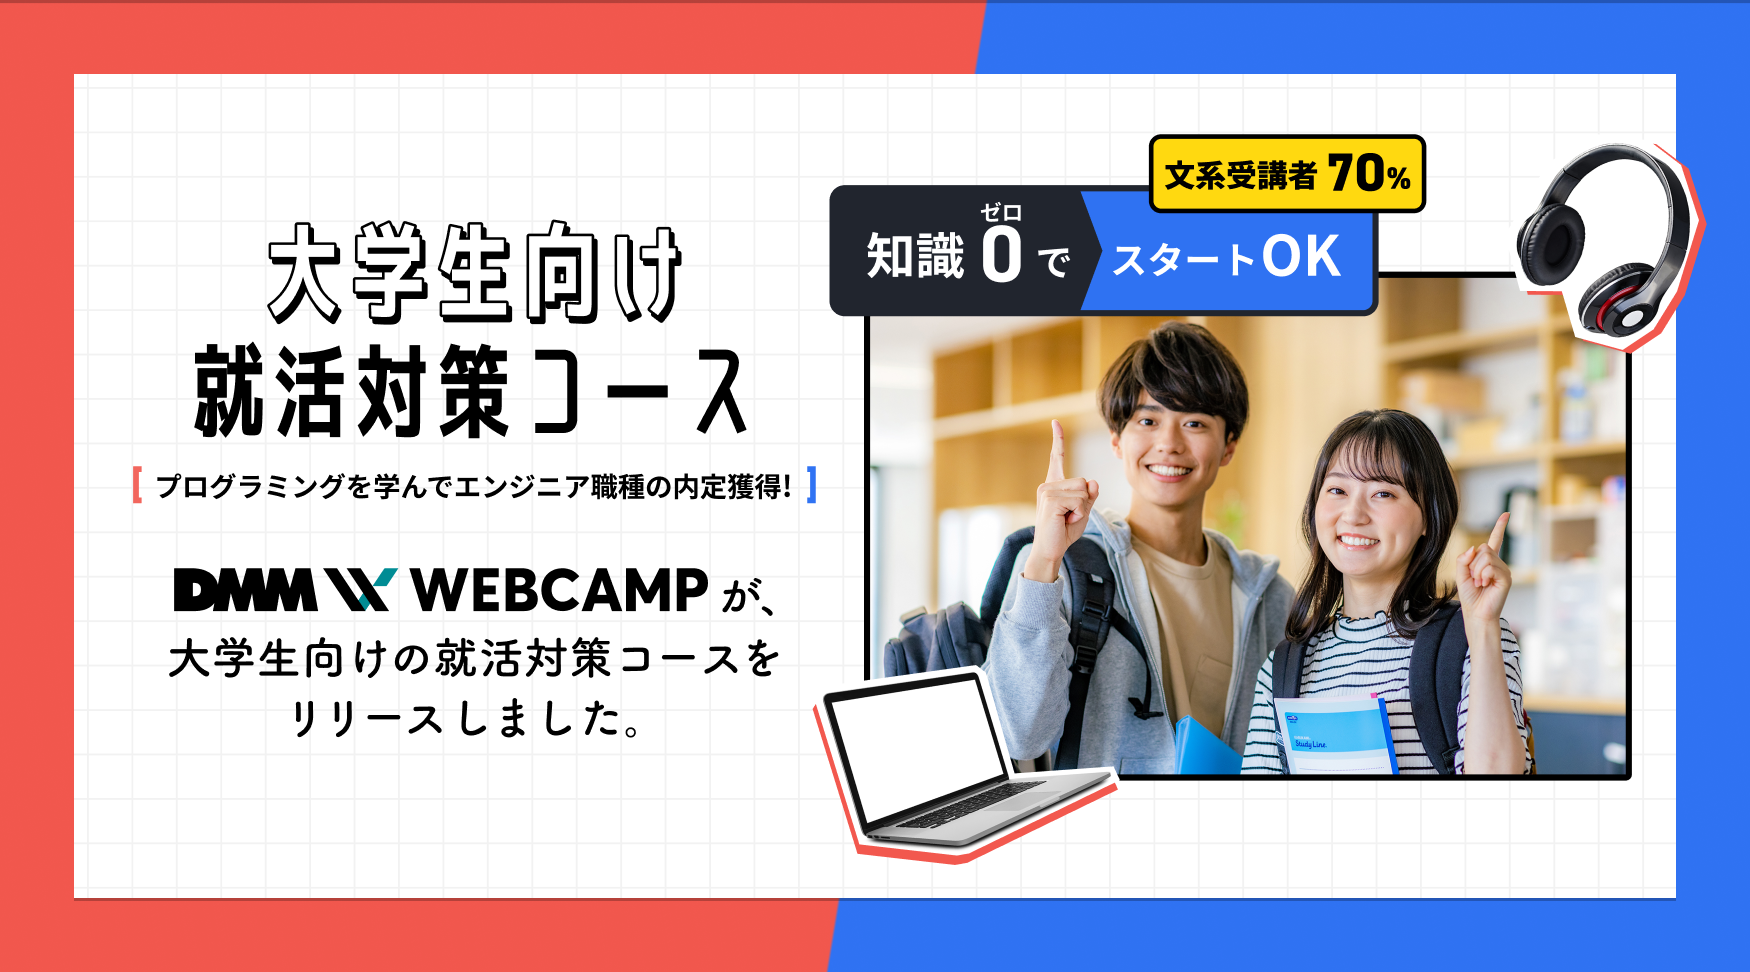 DMM WEBCAMP、「就活対策コース」についてプレスリリースが配信されました。